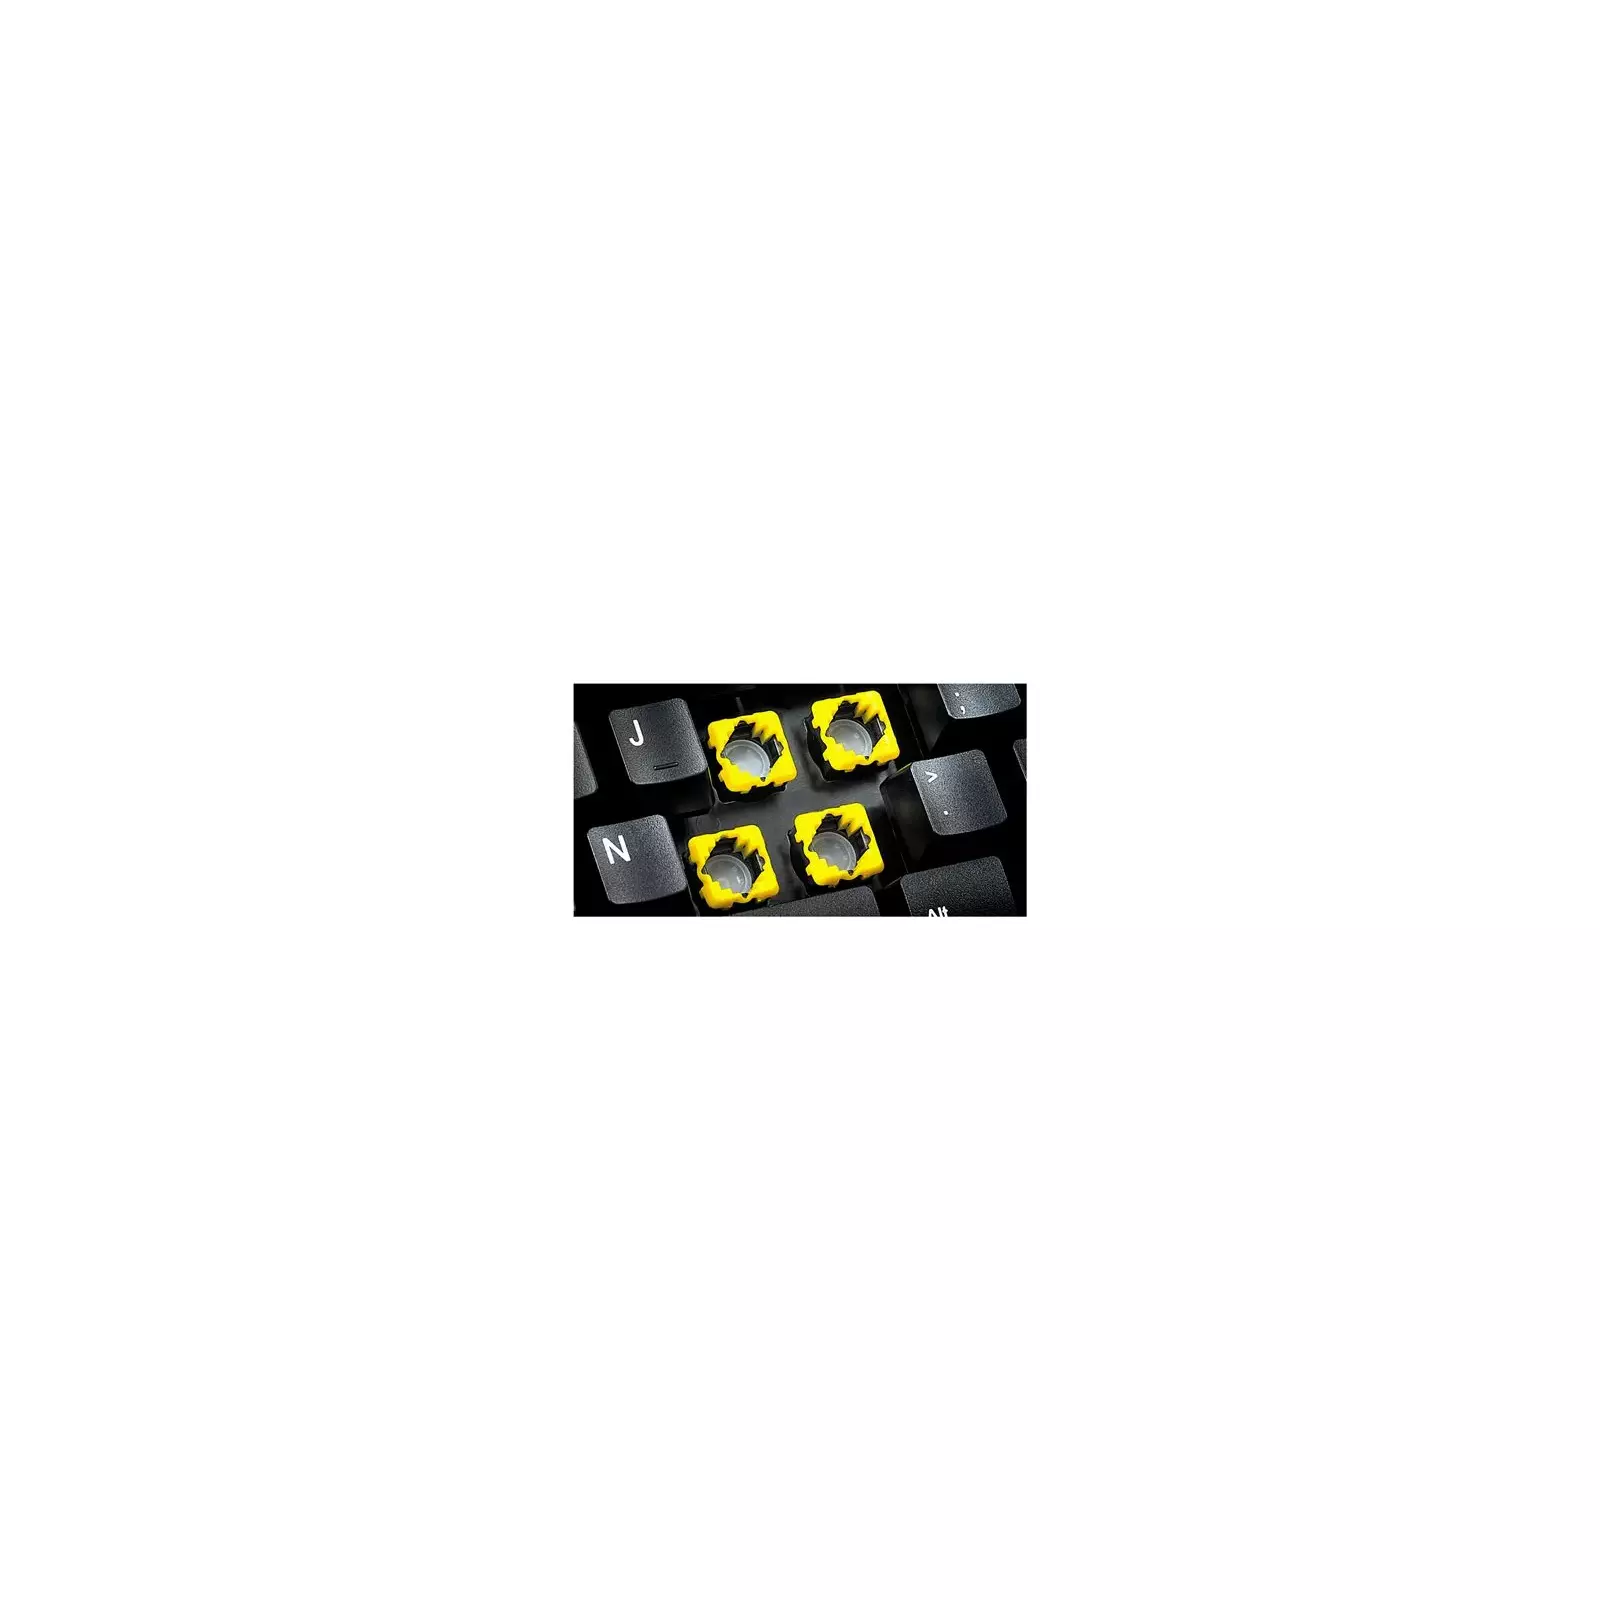 IOGEAR - GKM602R - Kaliber Gaming™ Wireless Gaming Keyboard and